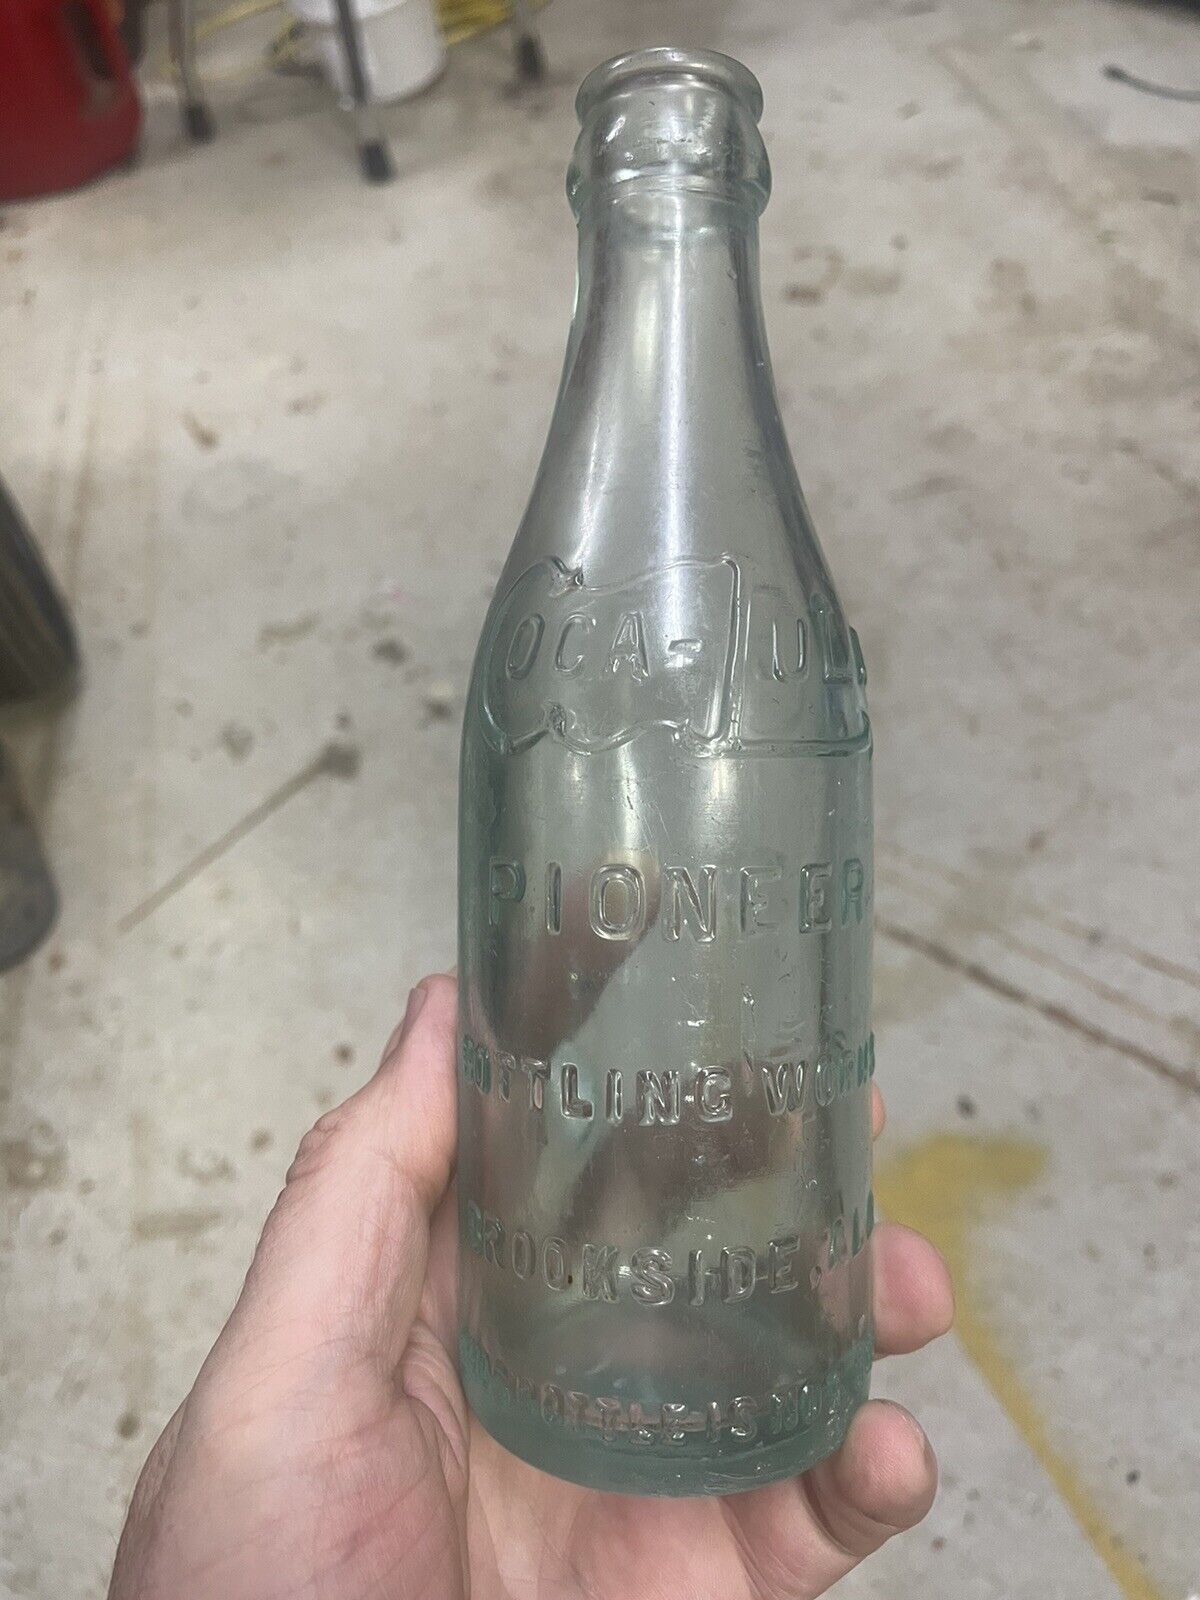 Coca-Lula Pioneer Brookside Ala Bottle